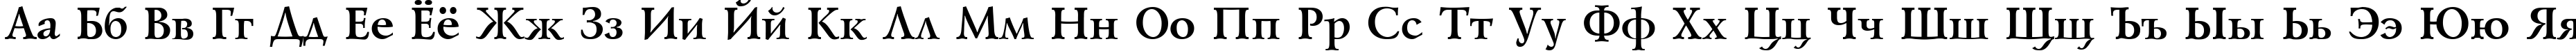 Пример написания русского алфавита шрифтом Lazurski Bold Cyrillic